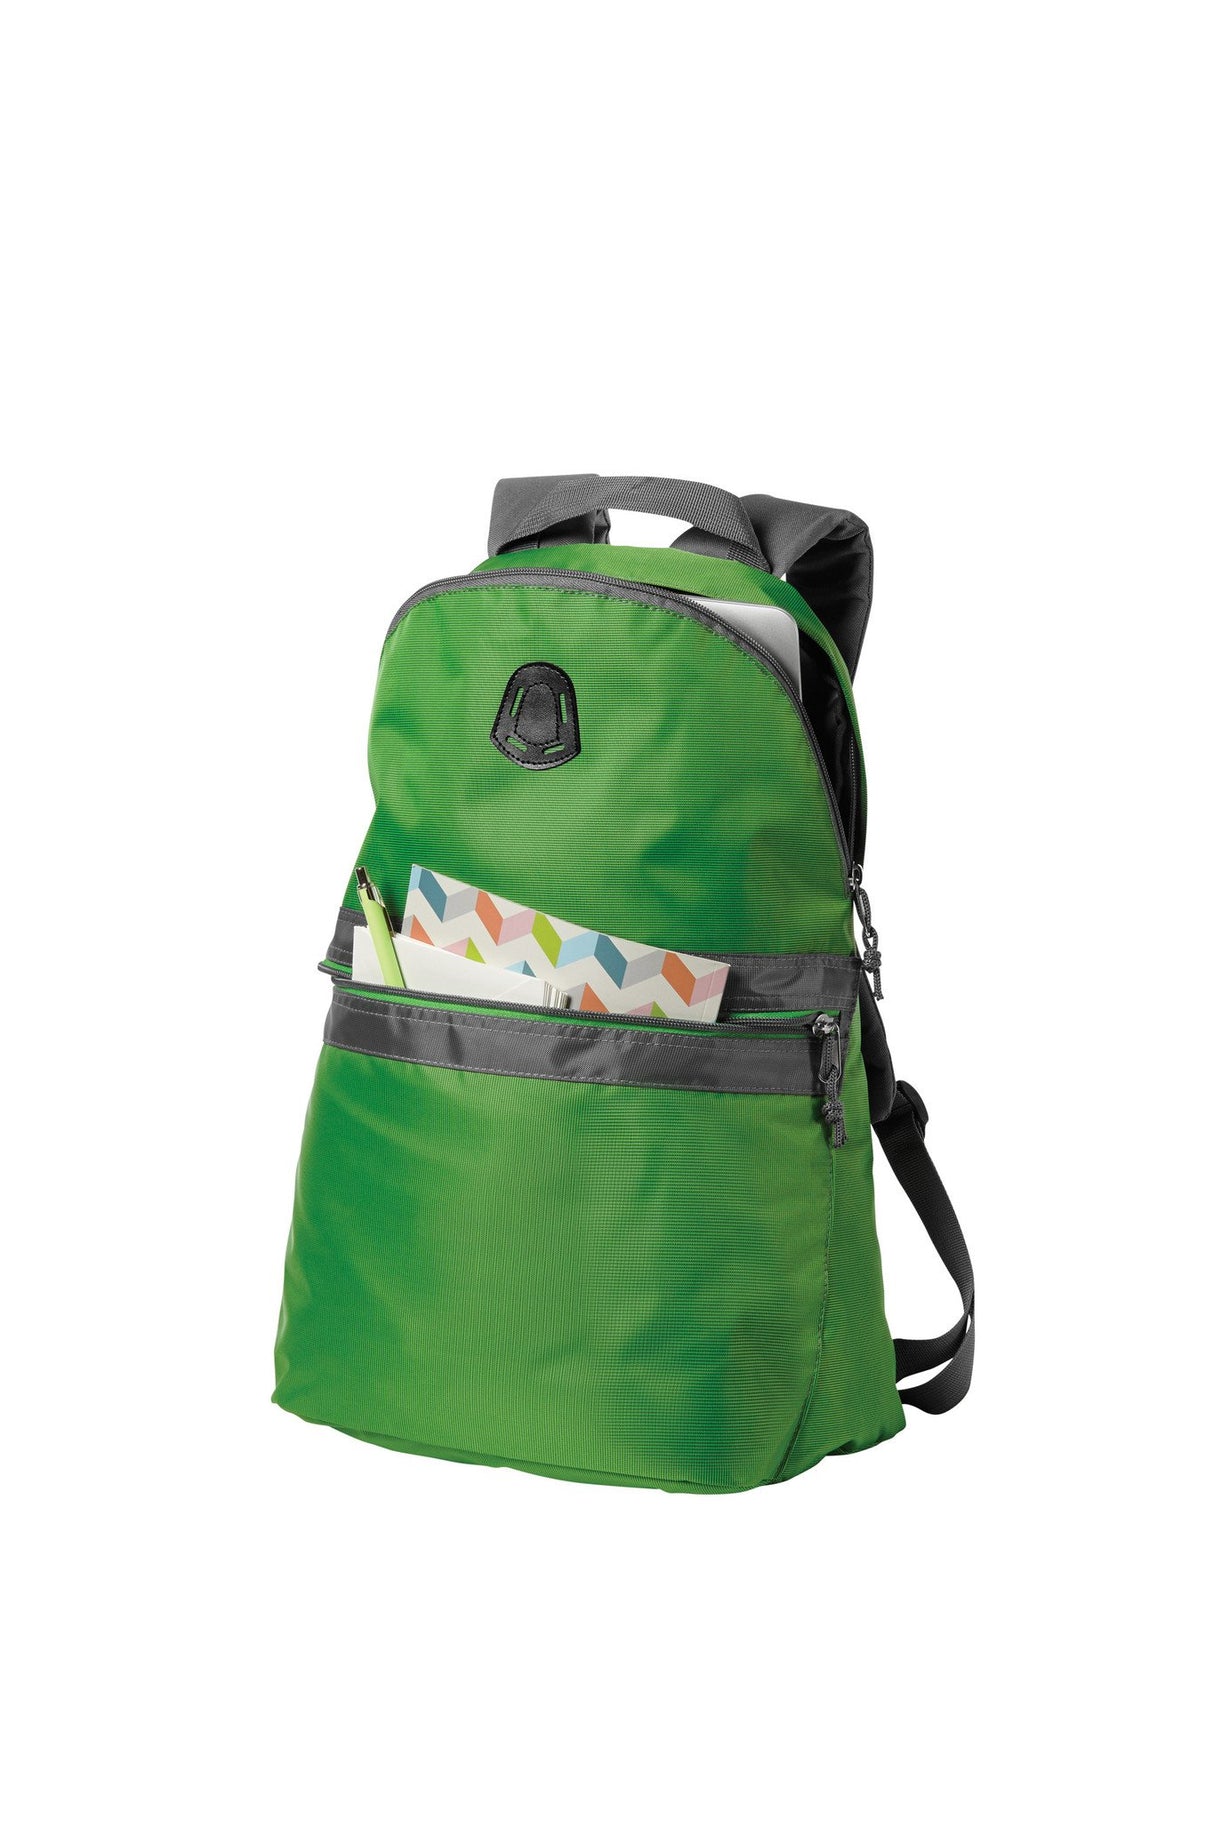 Stylish Multi-Purpose Nailhead Backpack